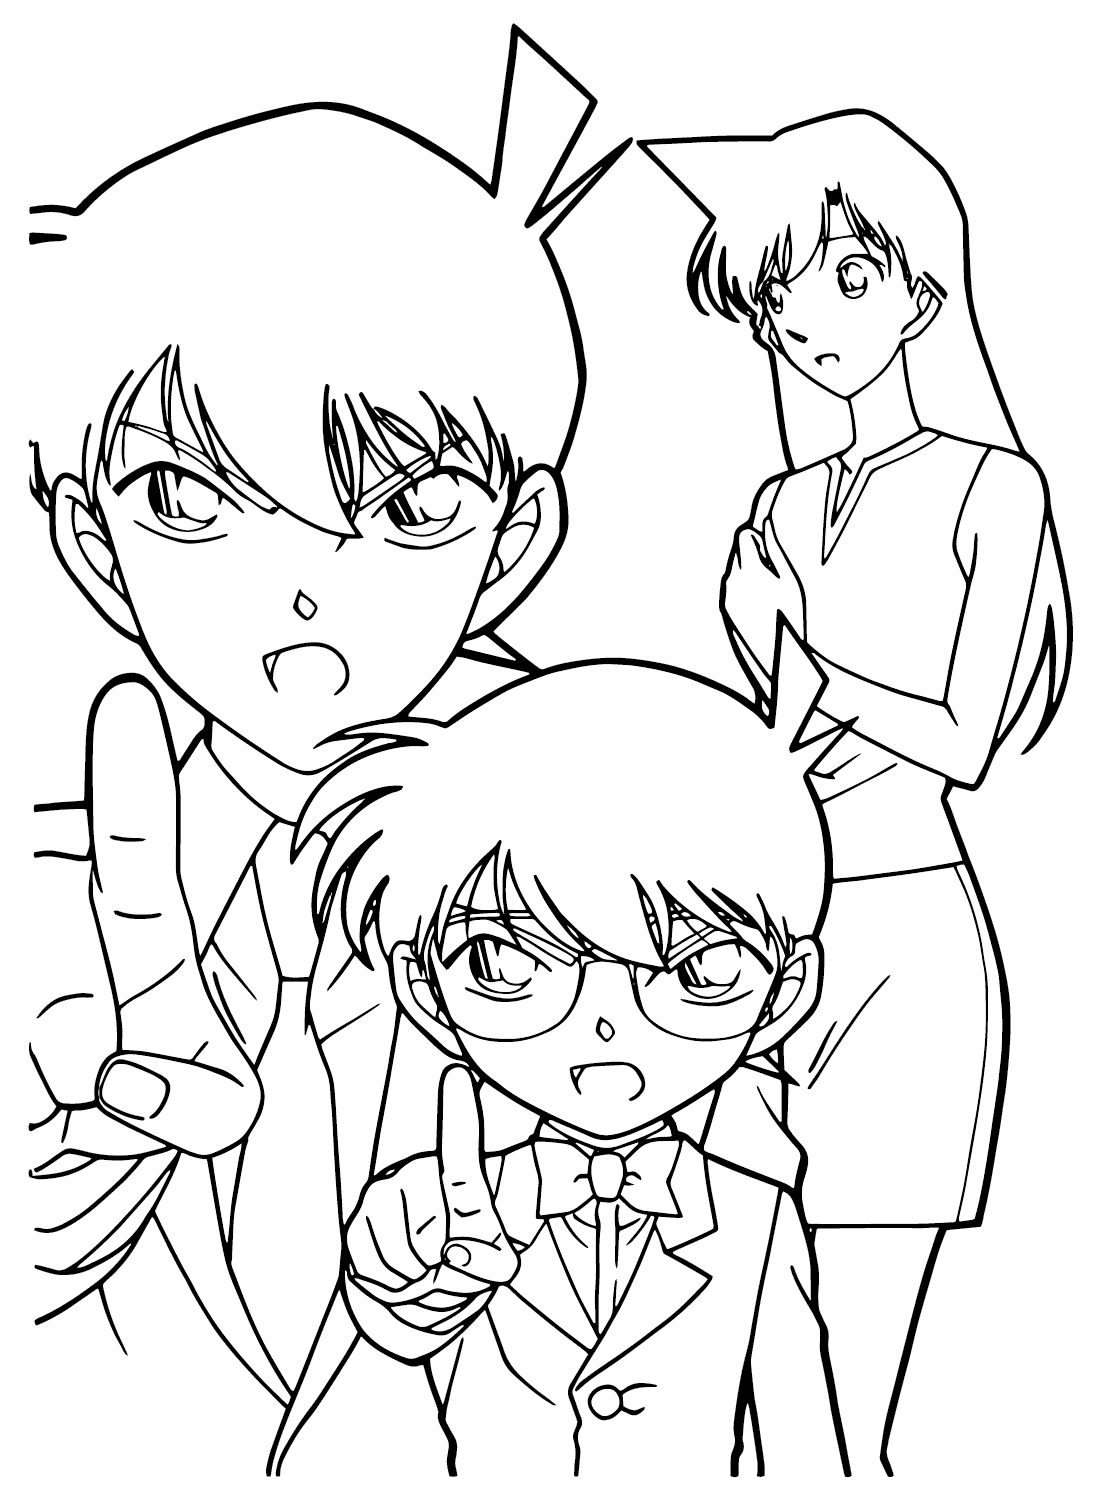 Shinichi, Conan and Ran Coloring Page